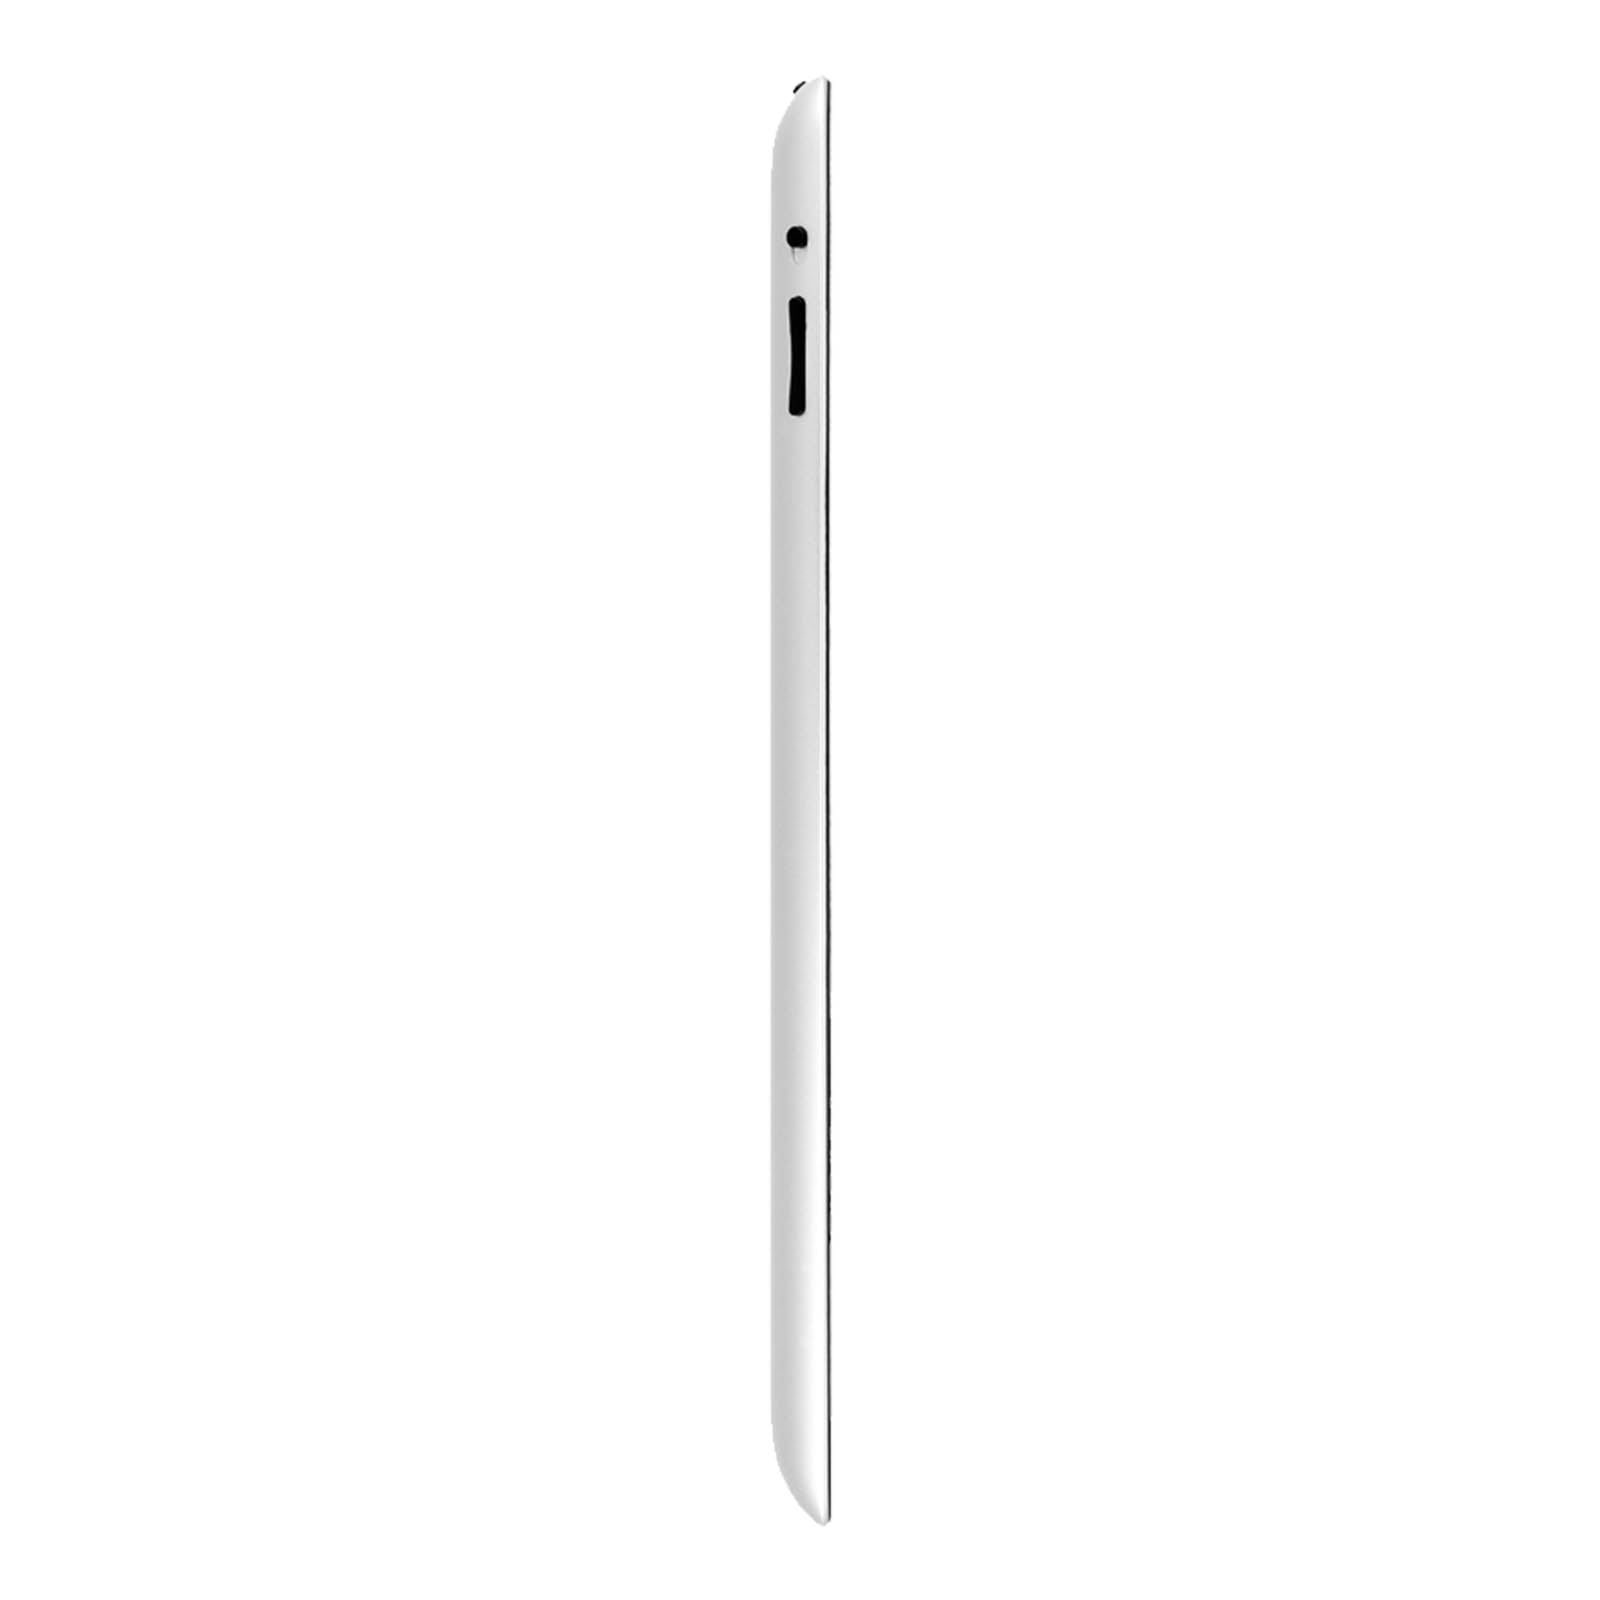 Apple iPad 3 16GB Black Pristine - WiFI